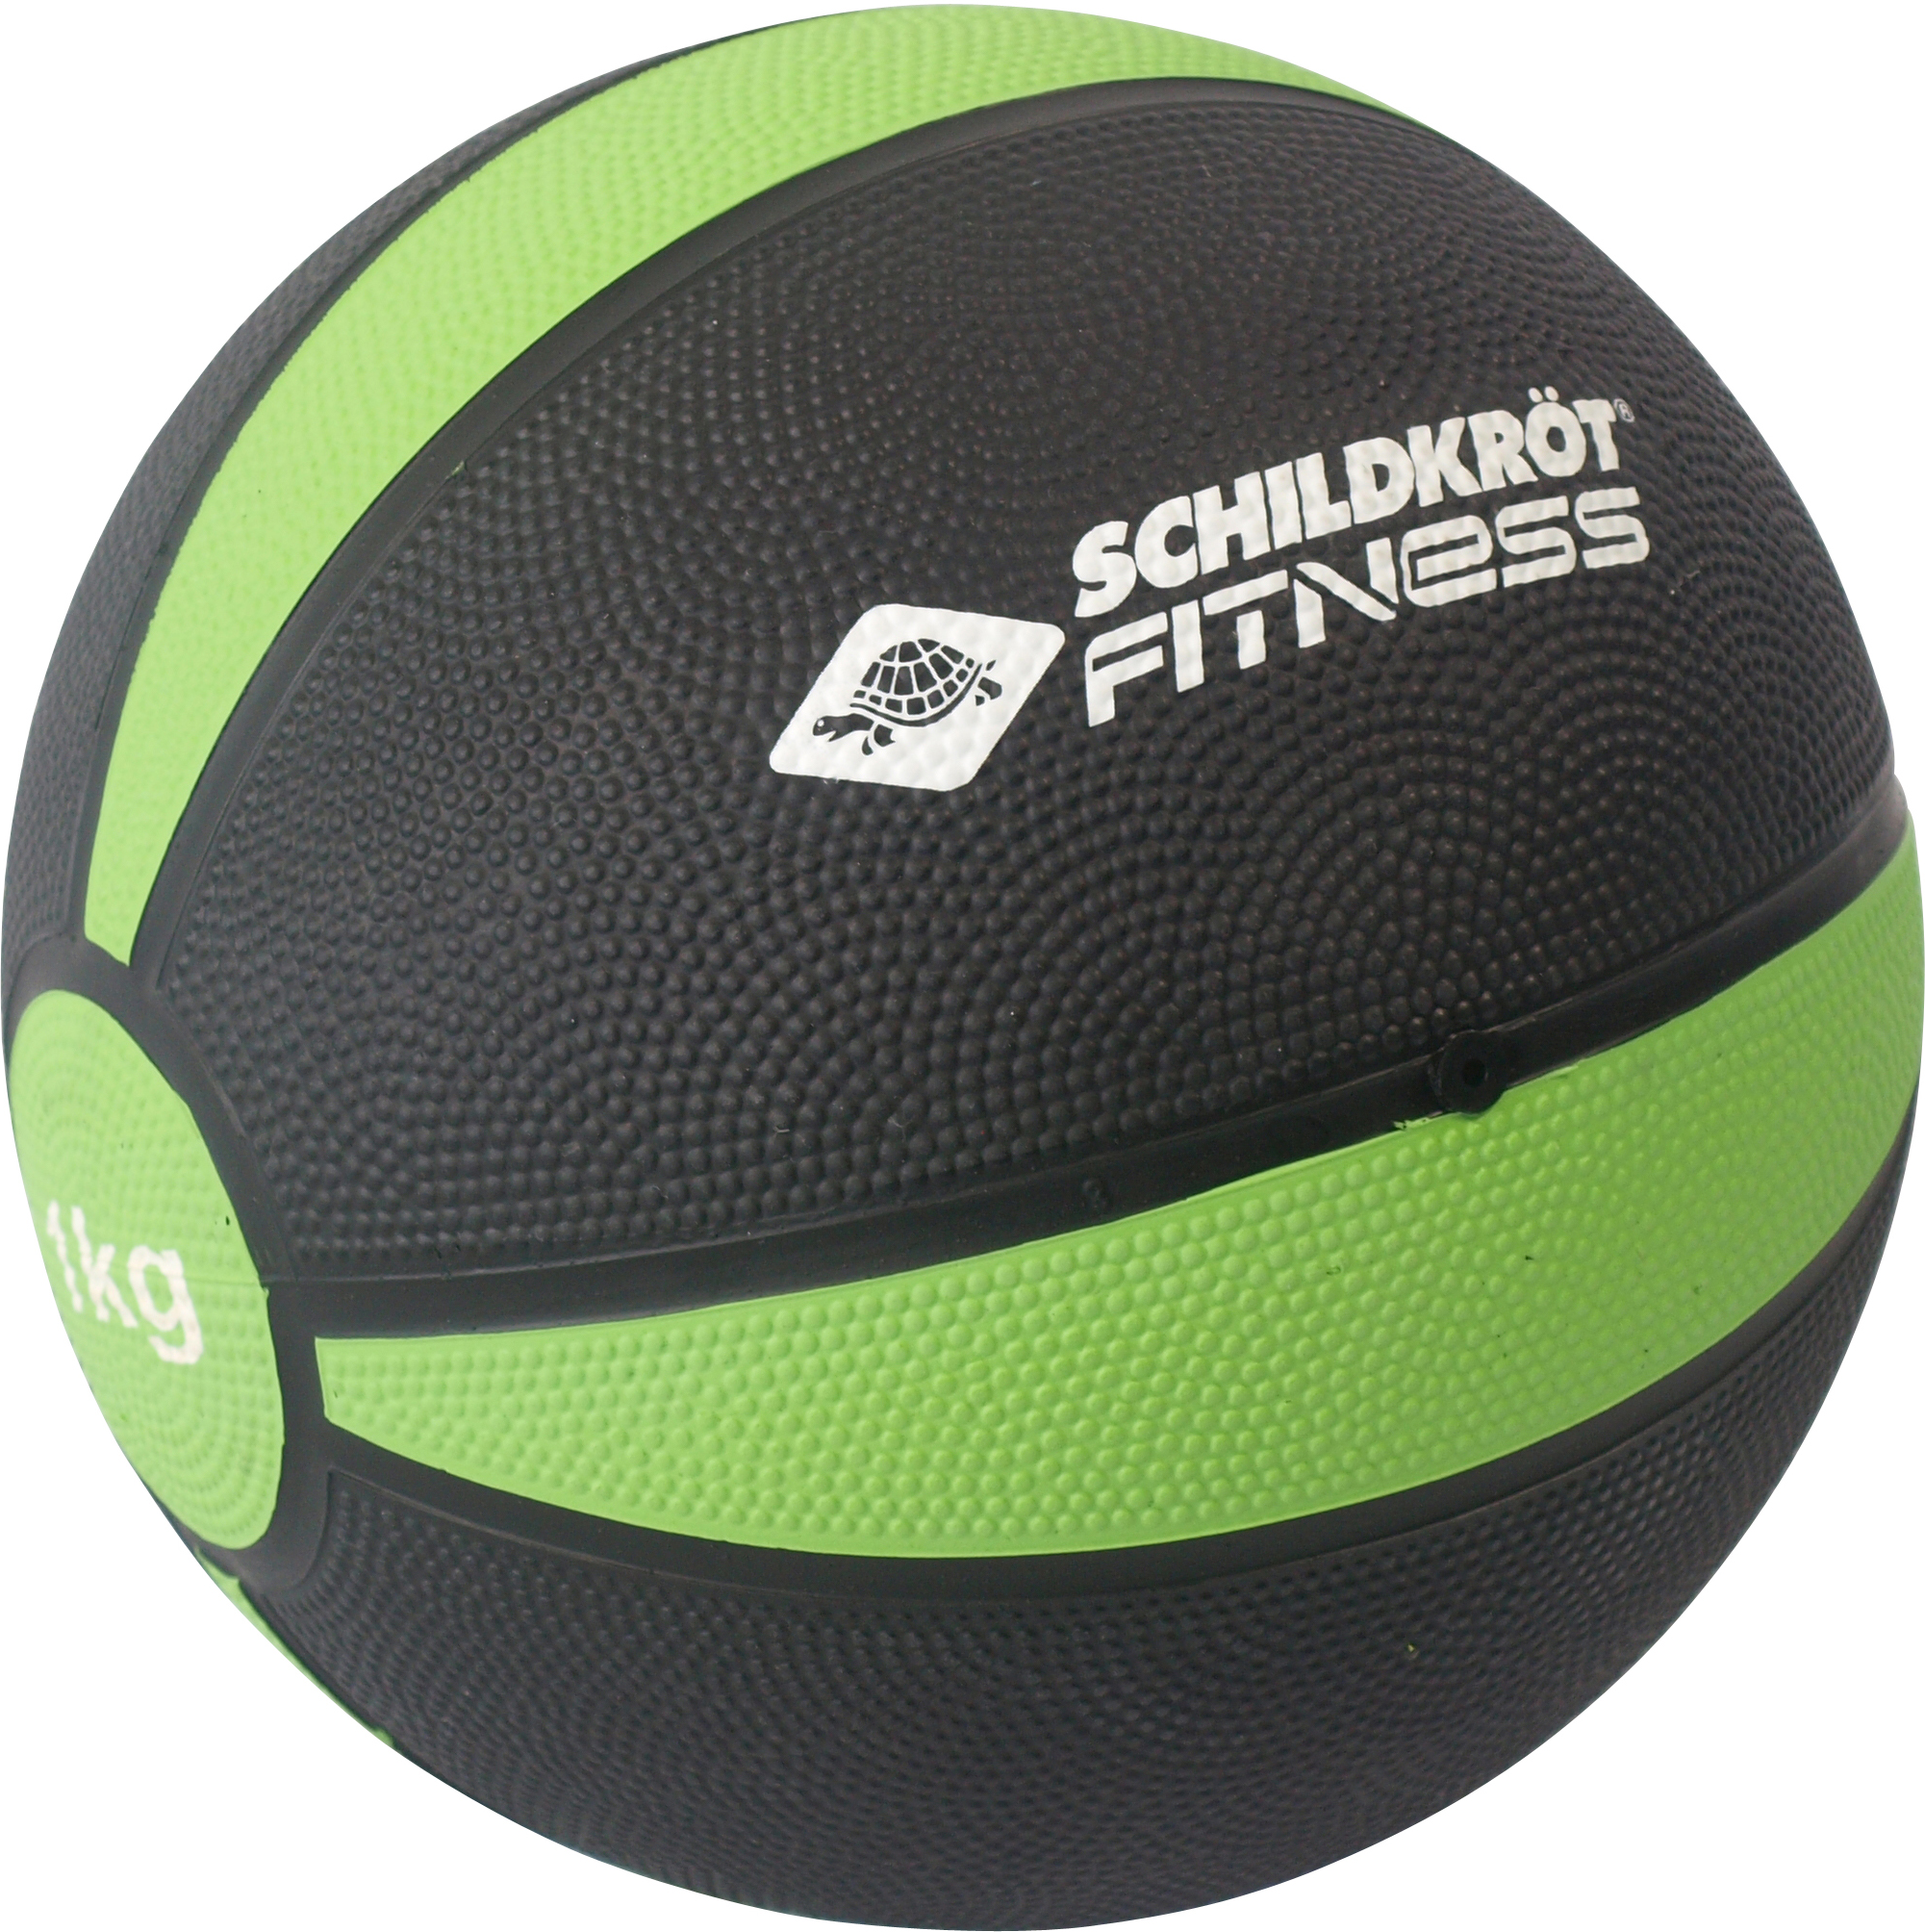 MEDICINE BALL Wolf box SK (black-green) sight - Fitness 1kg, 000 Intersport | in